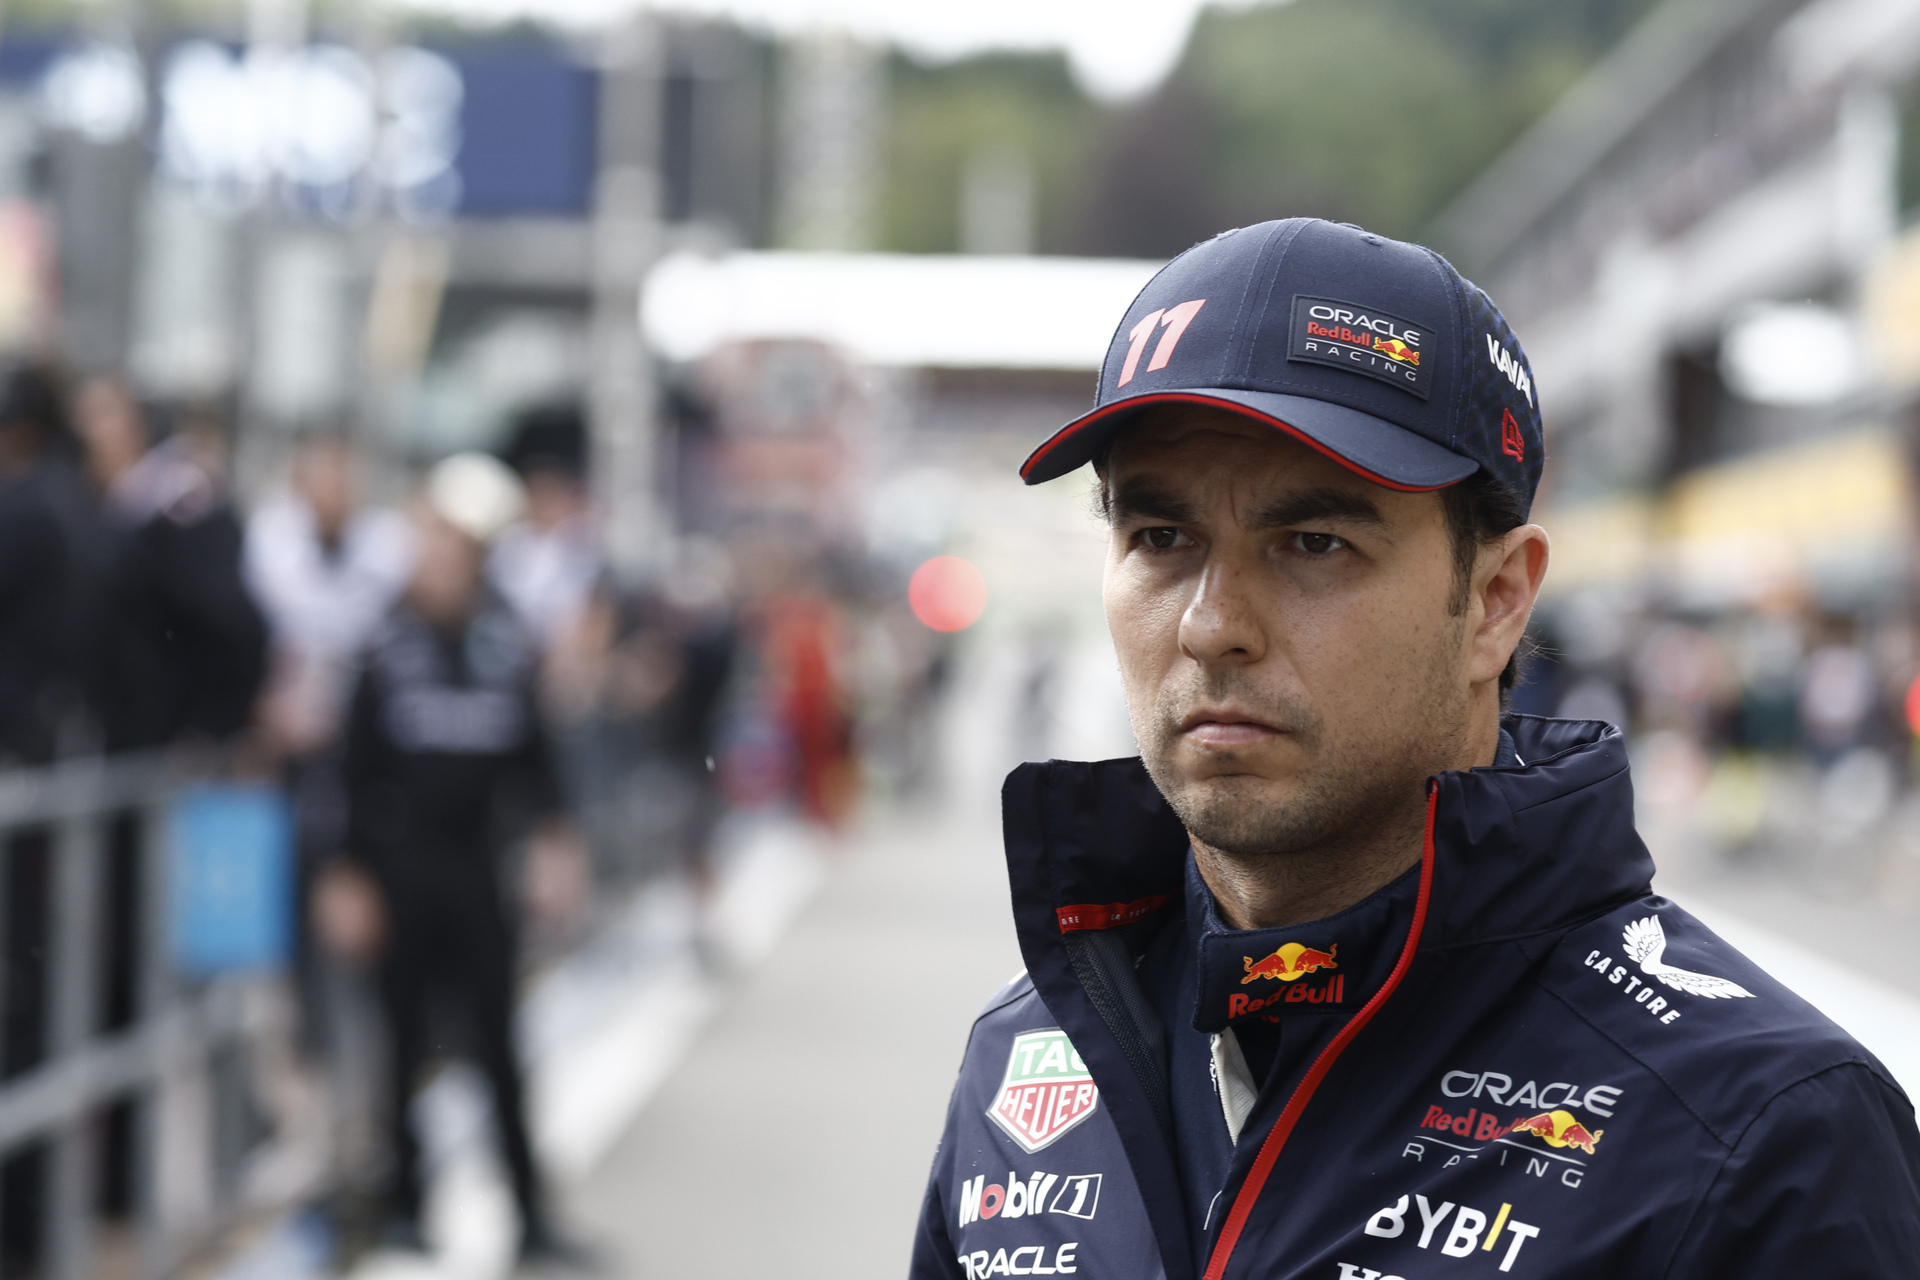 Expiloto de la F1 'cruza los dedos' para que Red Bull cambie a Checo Pérez